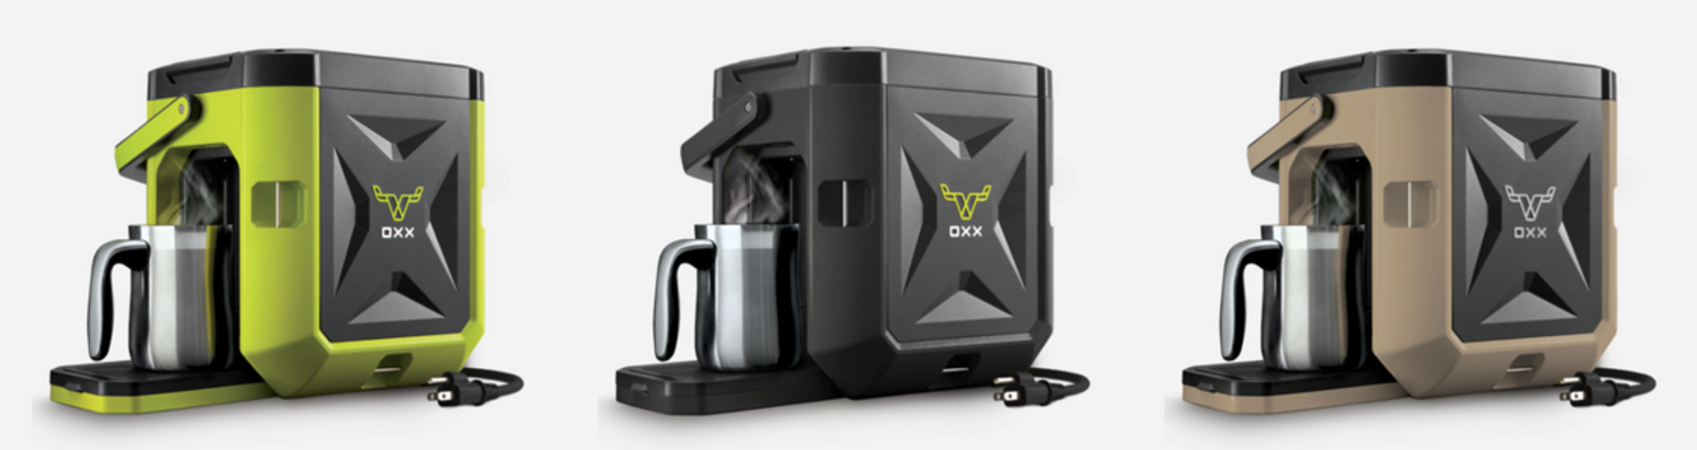 The COFFEEBOXX Jobsite Coffee Maker 